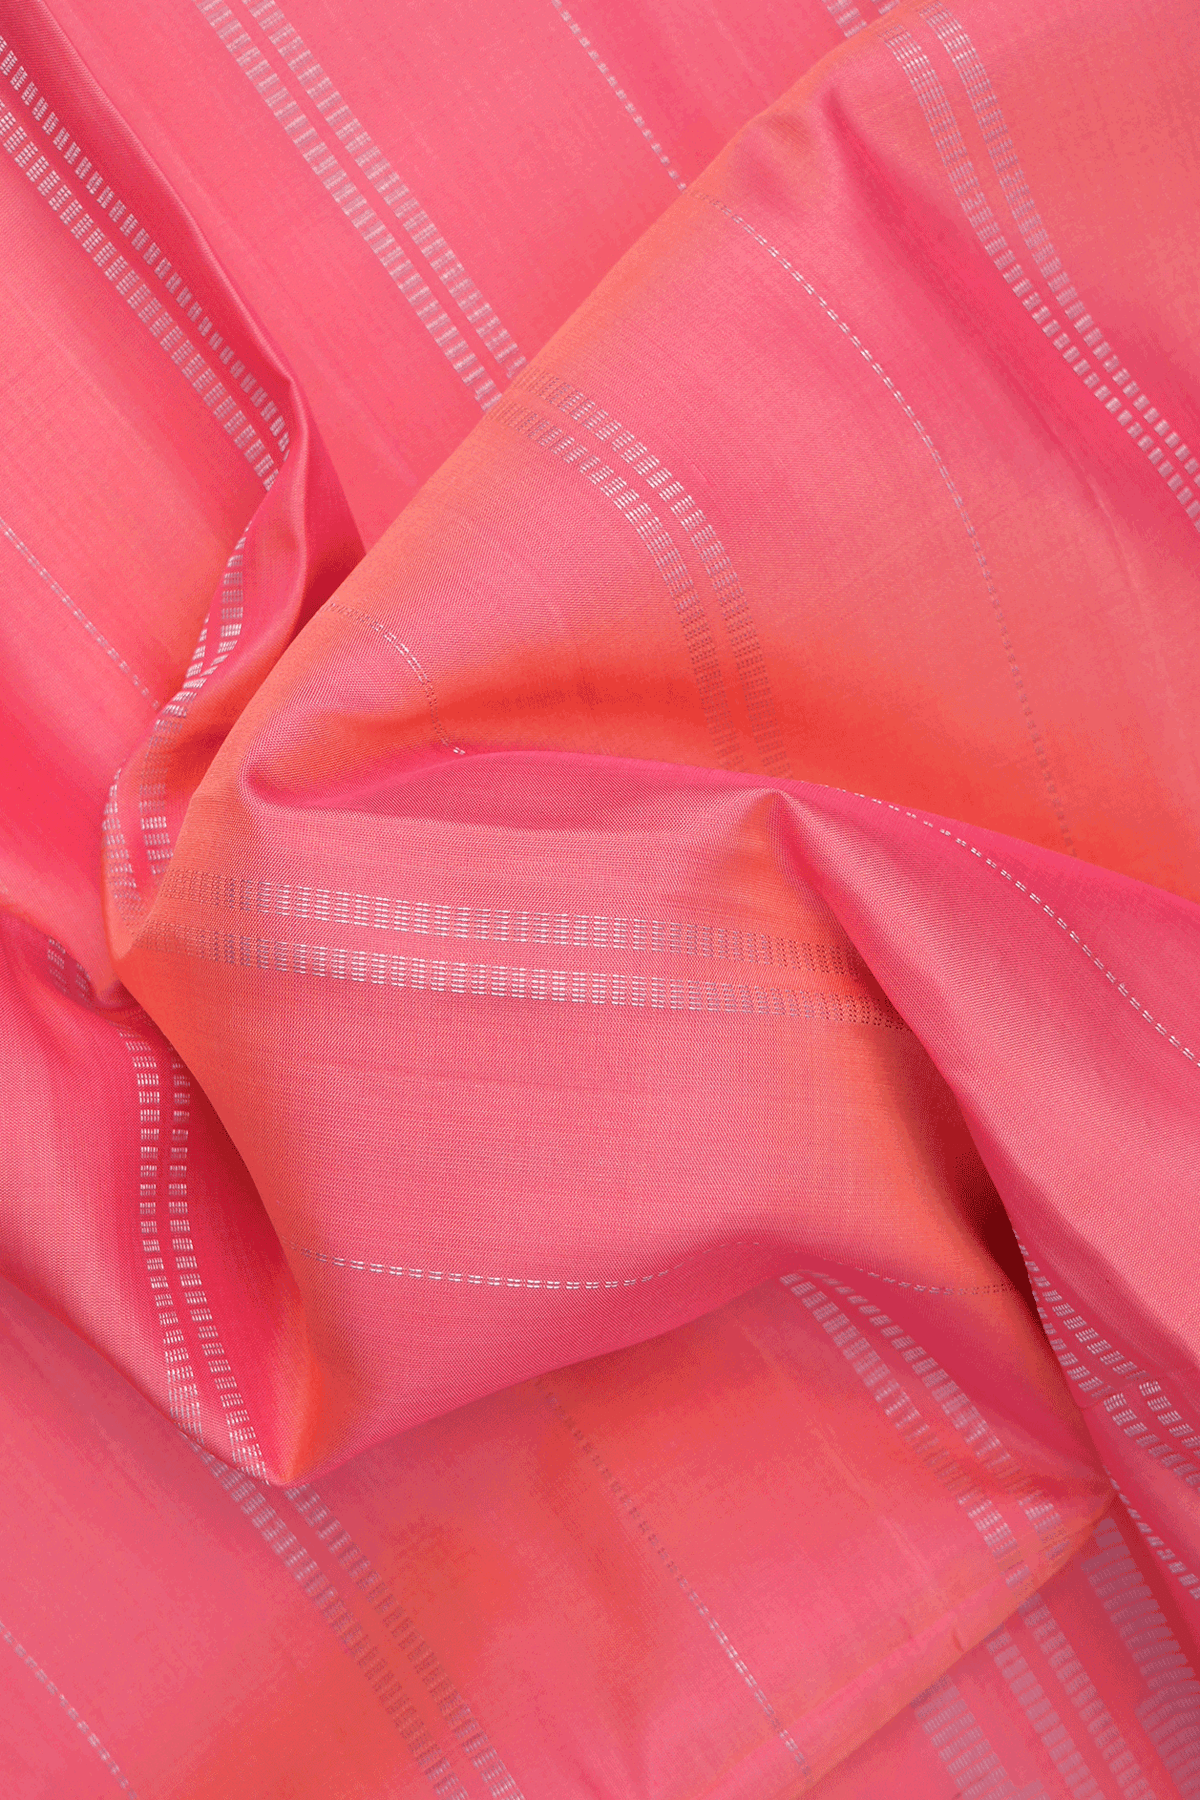 Zari Stripes Design Coral Pink Soft Silk Saree